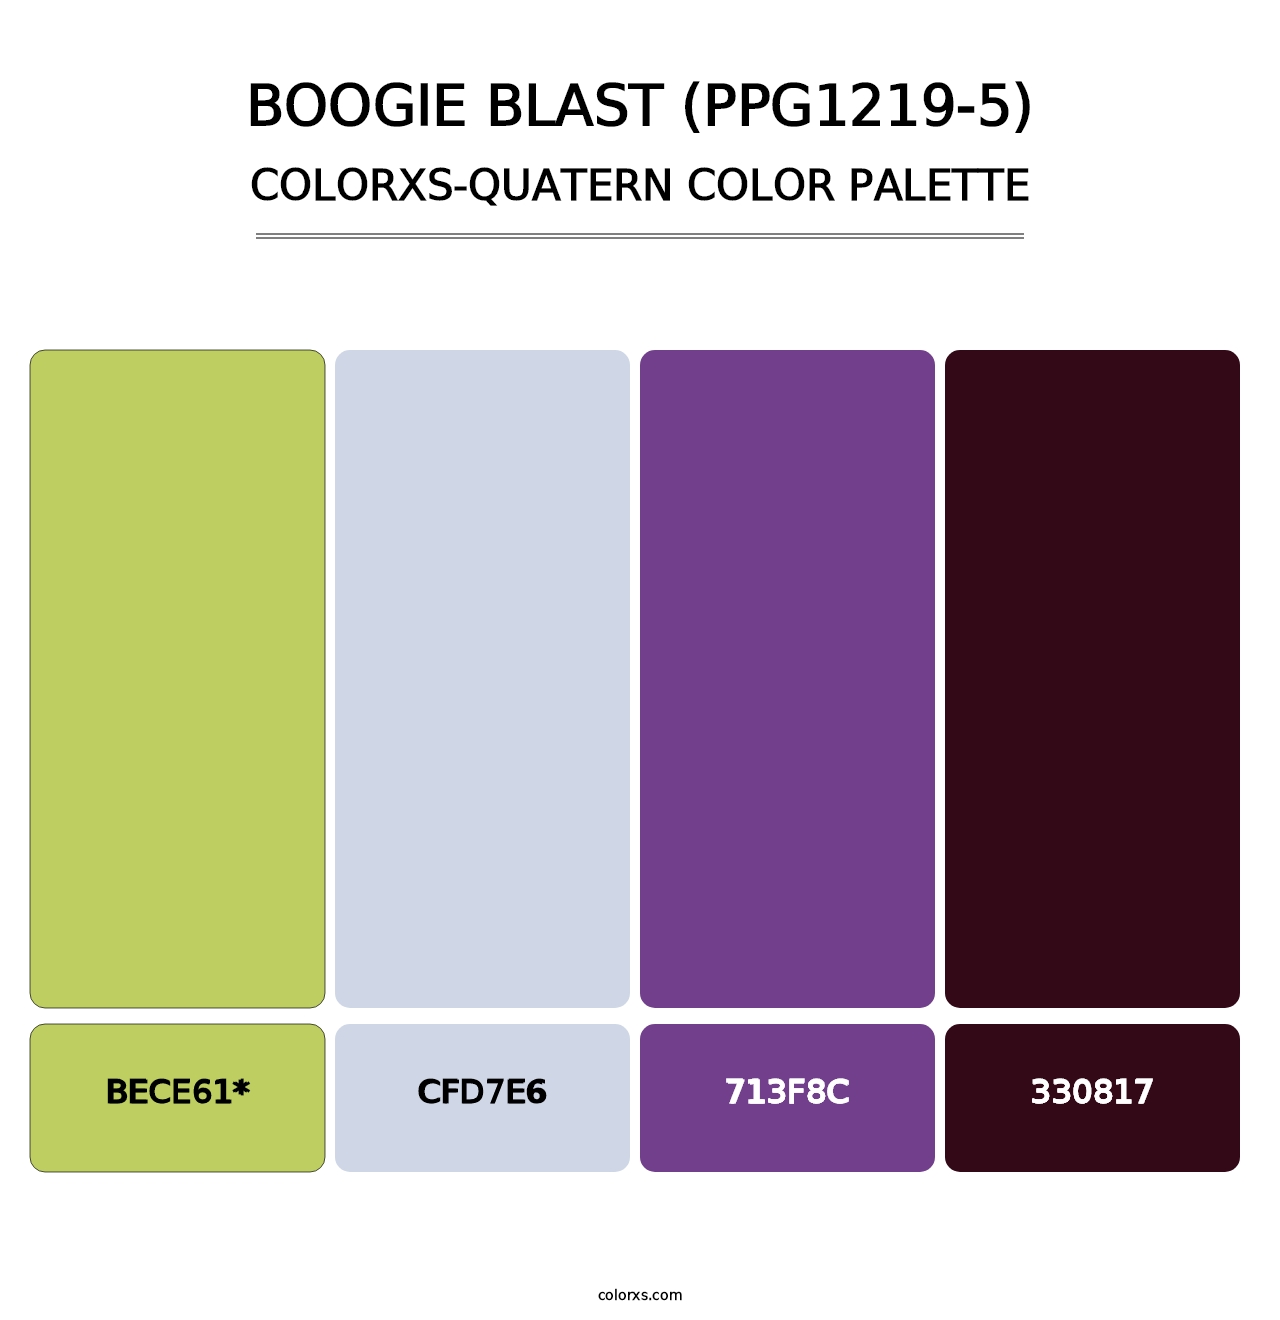 Boogie Blast (PPG1219-5) - Colorxs Quatern Palette